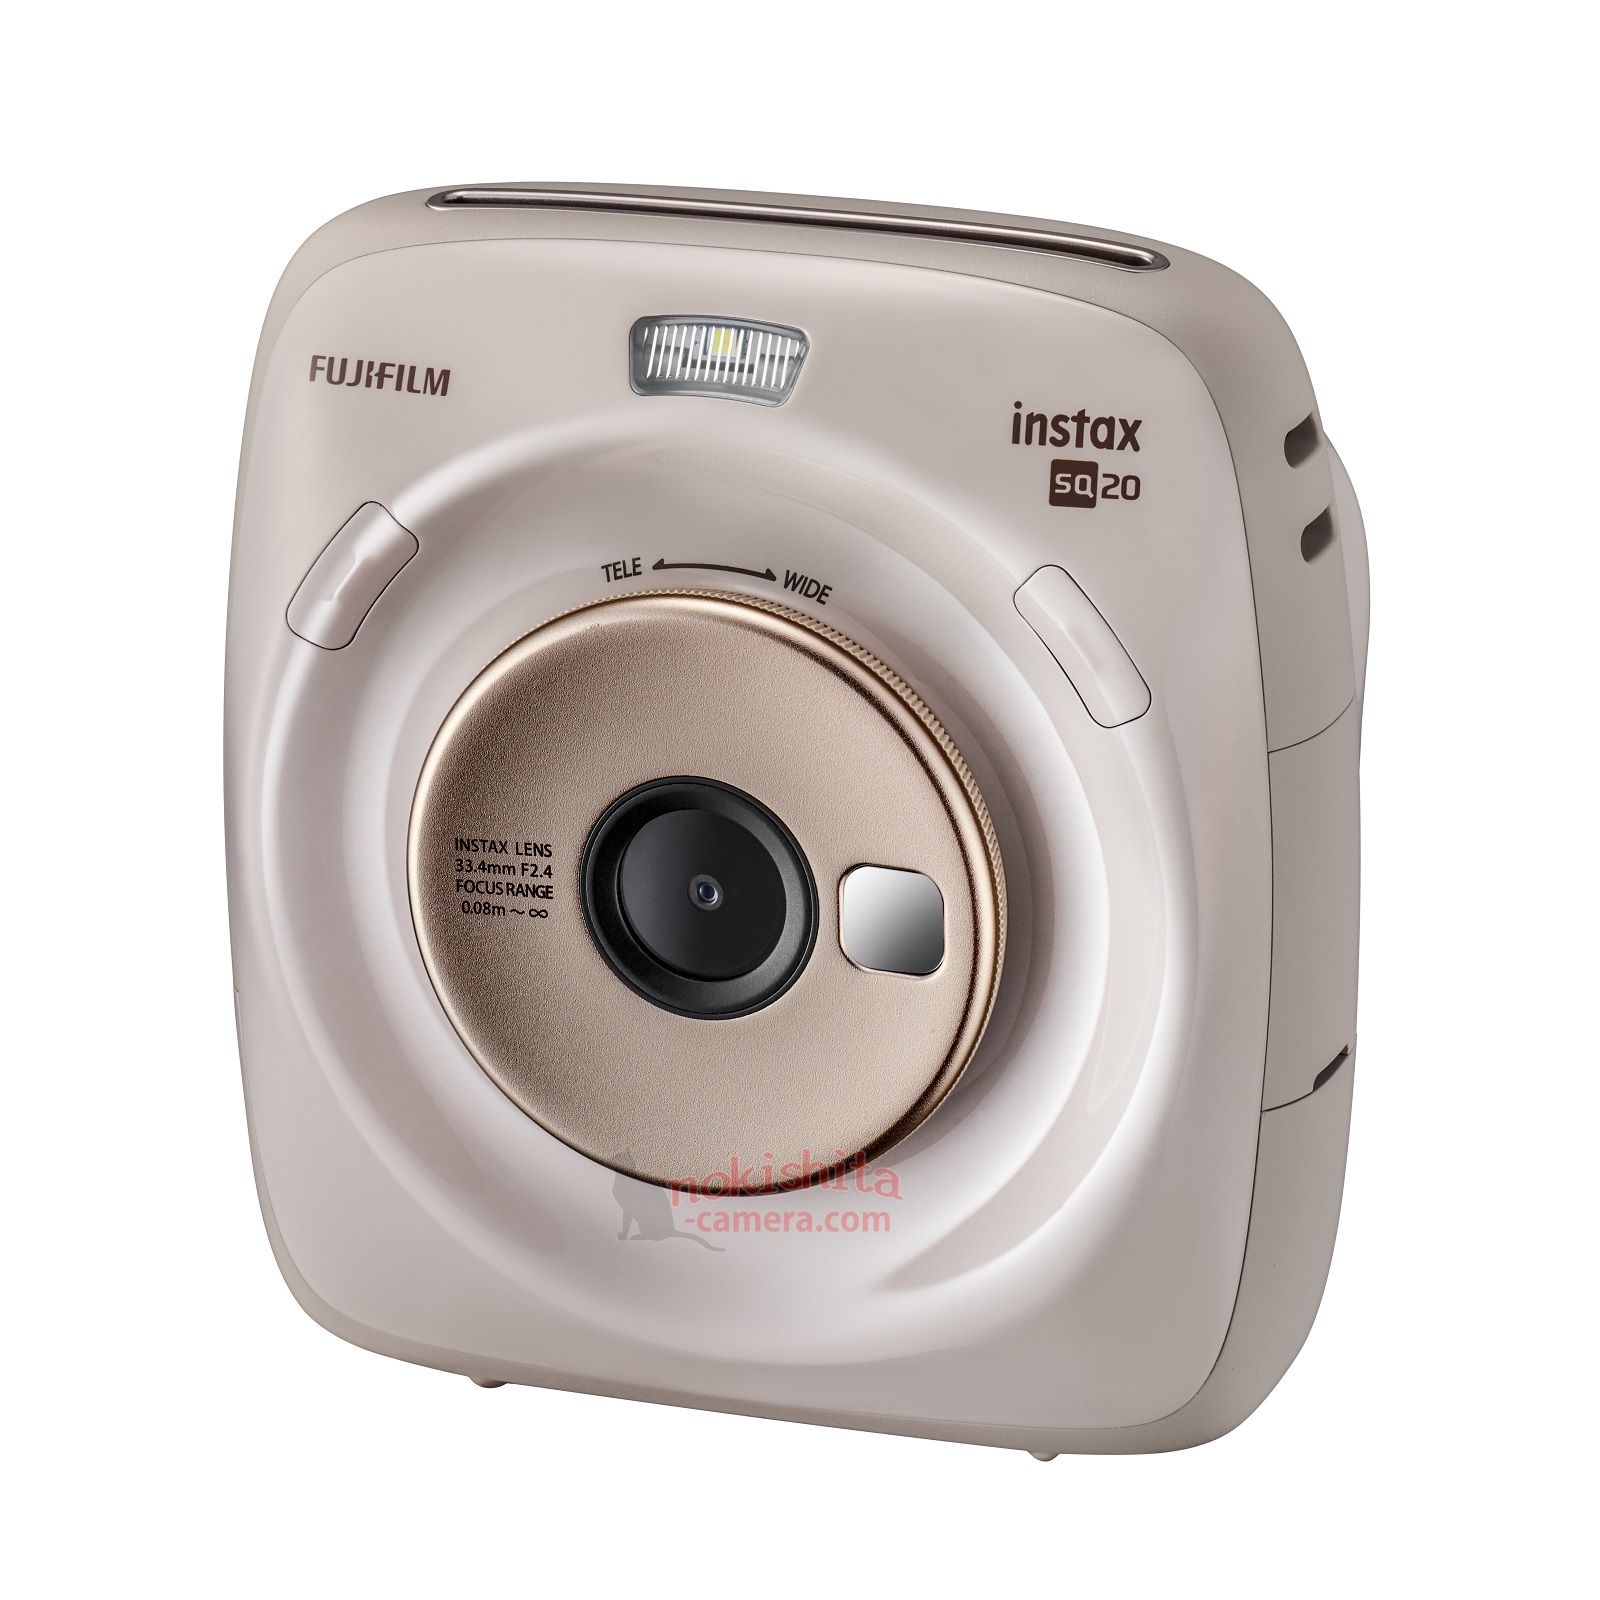 New Fuji Instax Square SQ 20 hybrid instant camera leaked ...